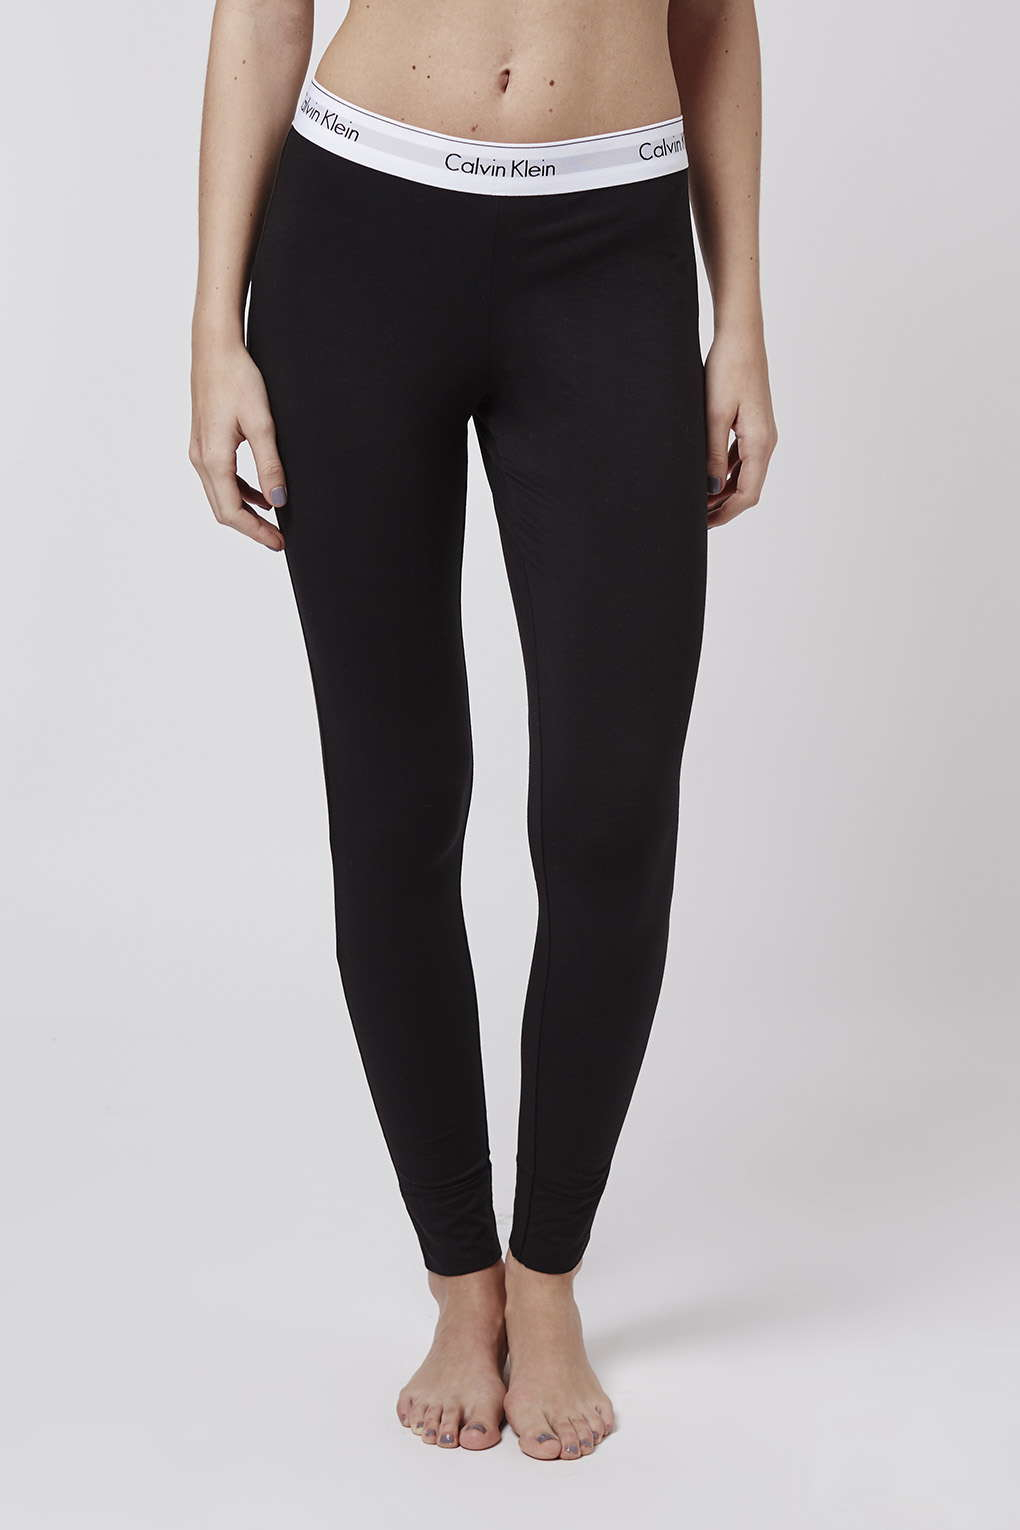 Topshop Modern Cotton Black Leggings By Calvin Klein In Black Lyst